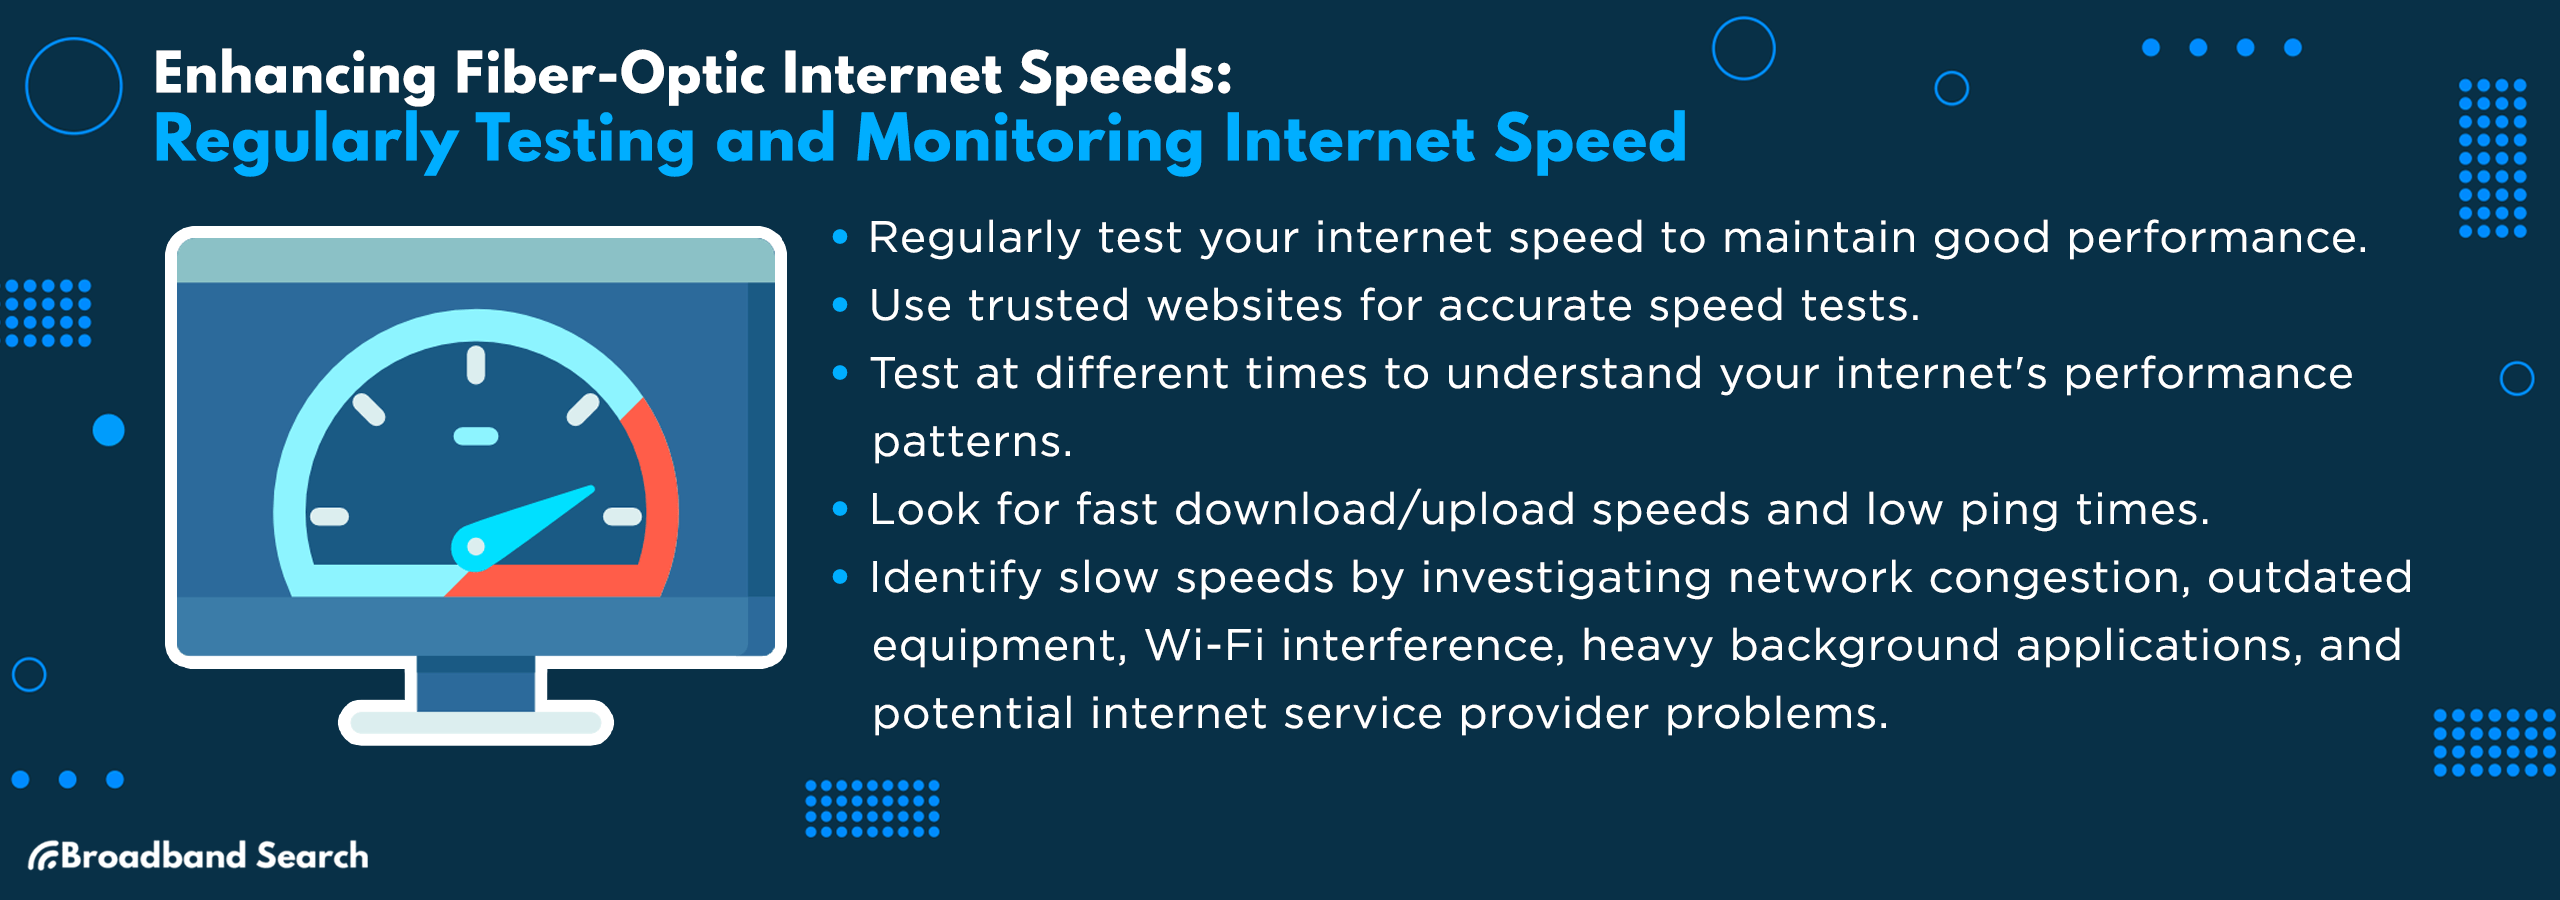 Tip on enhancing fiber-optic internet speeds: Regularly testing and monitoring internet speed